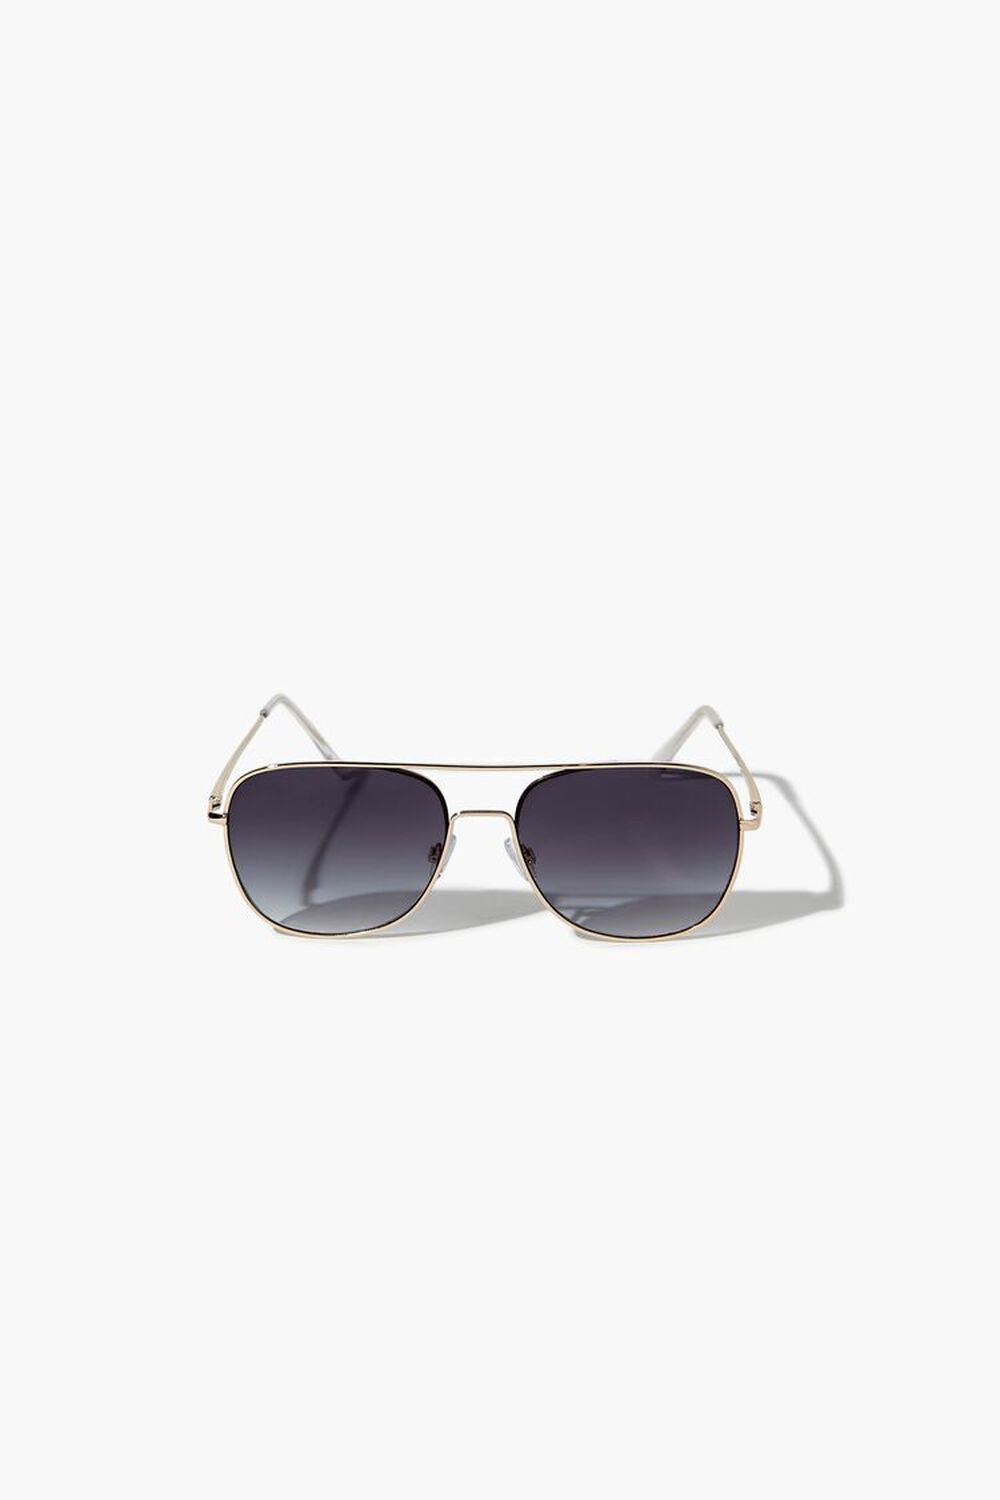 GOLD/BLACK Tinted Aviator Sunglasses, image 1